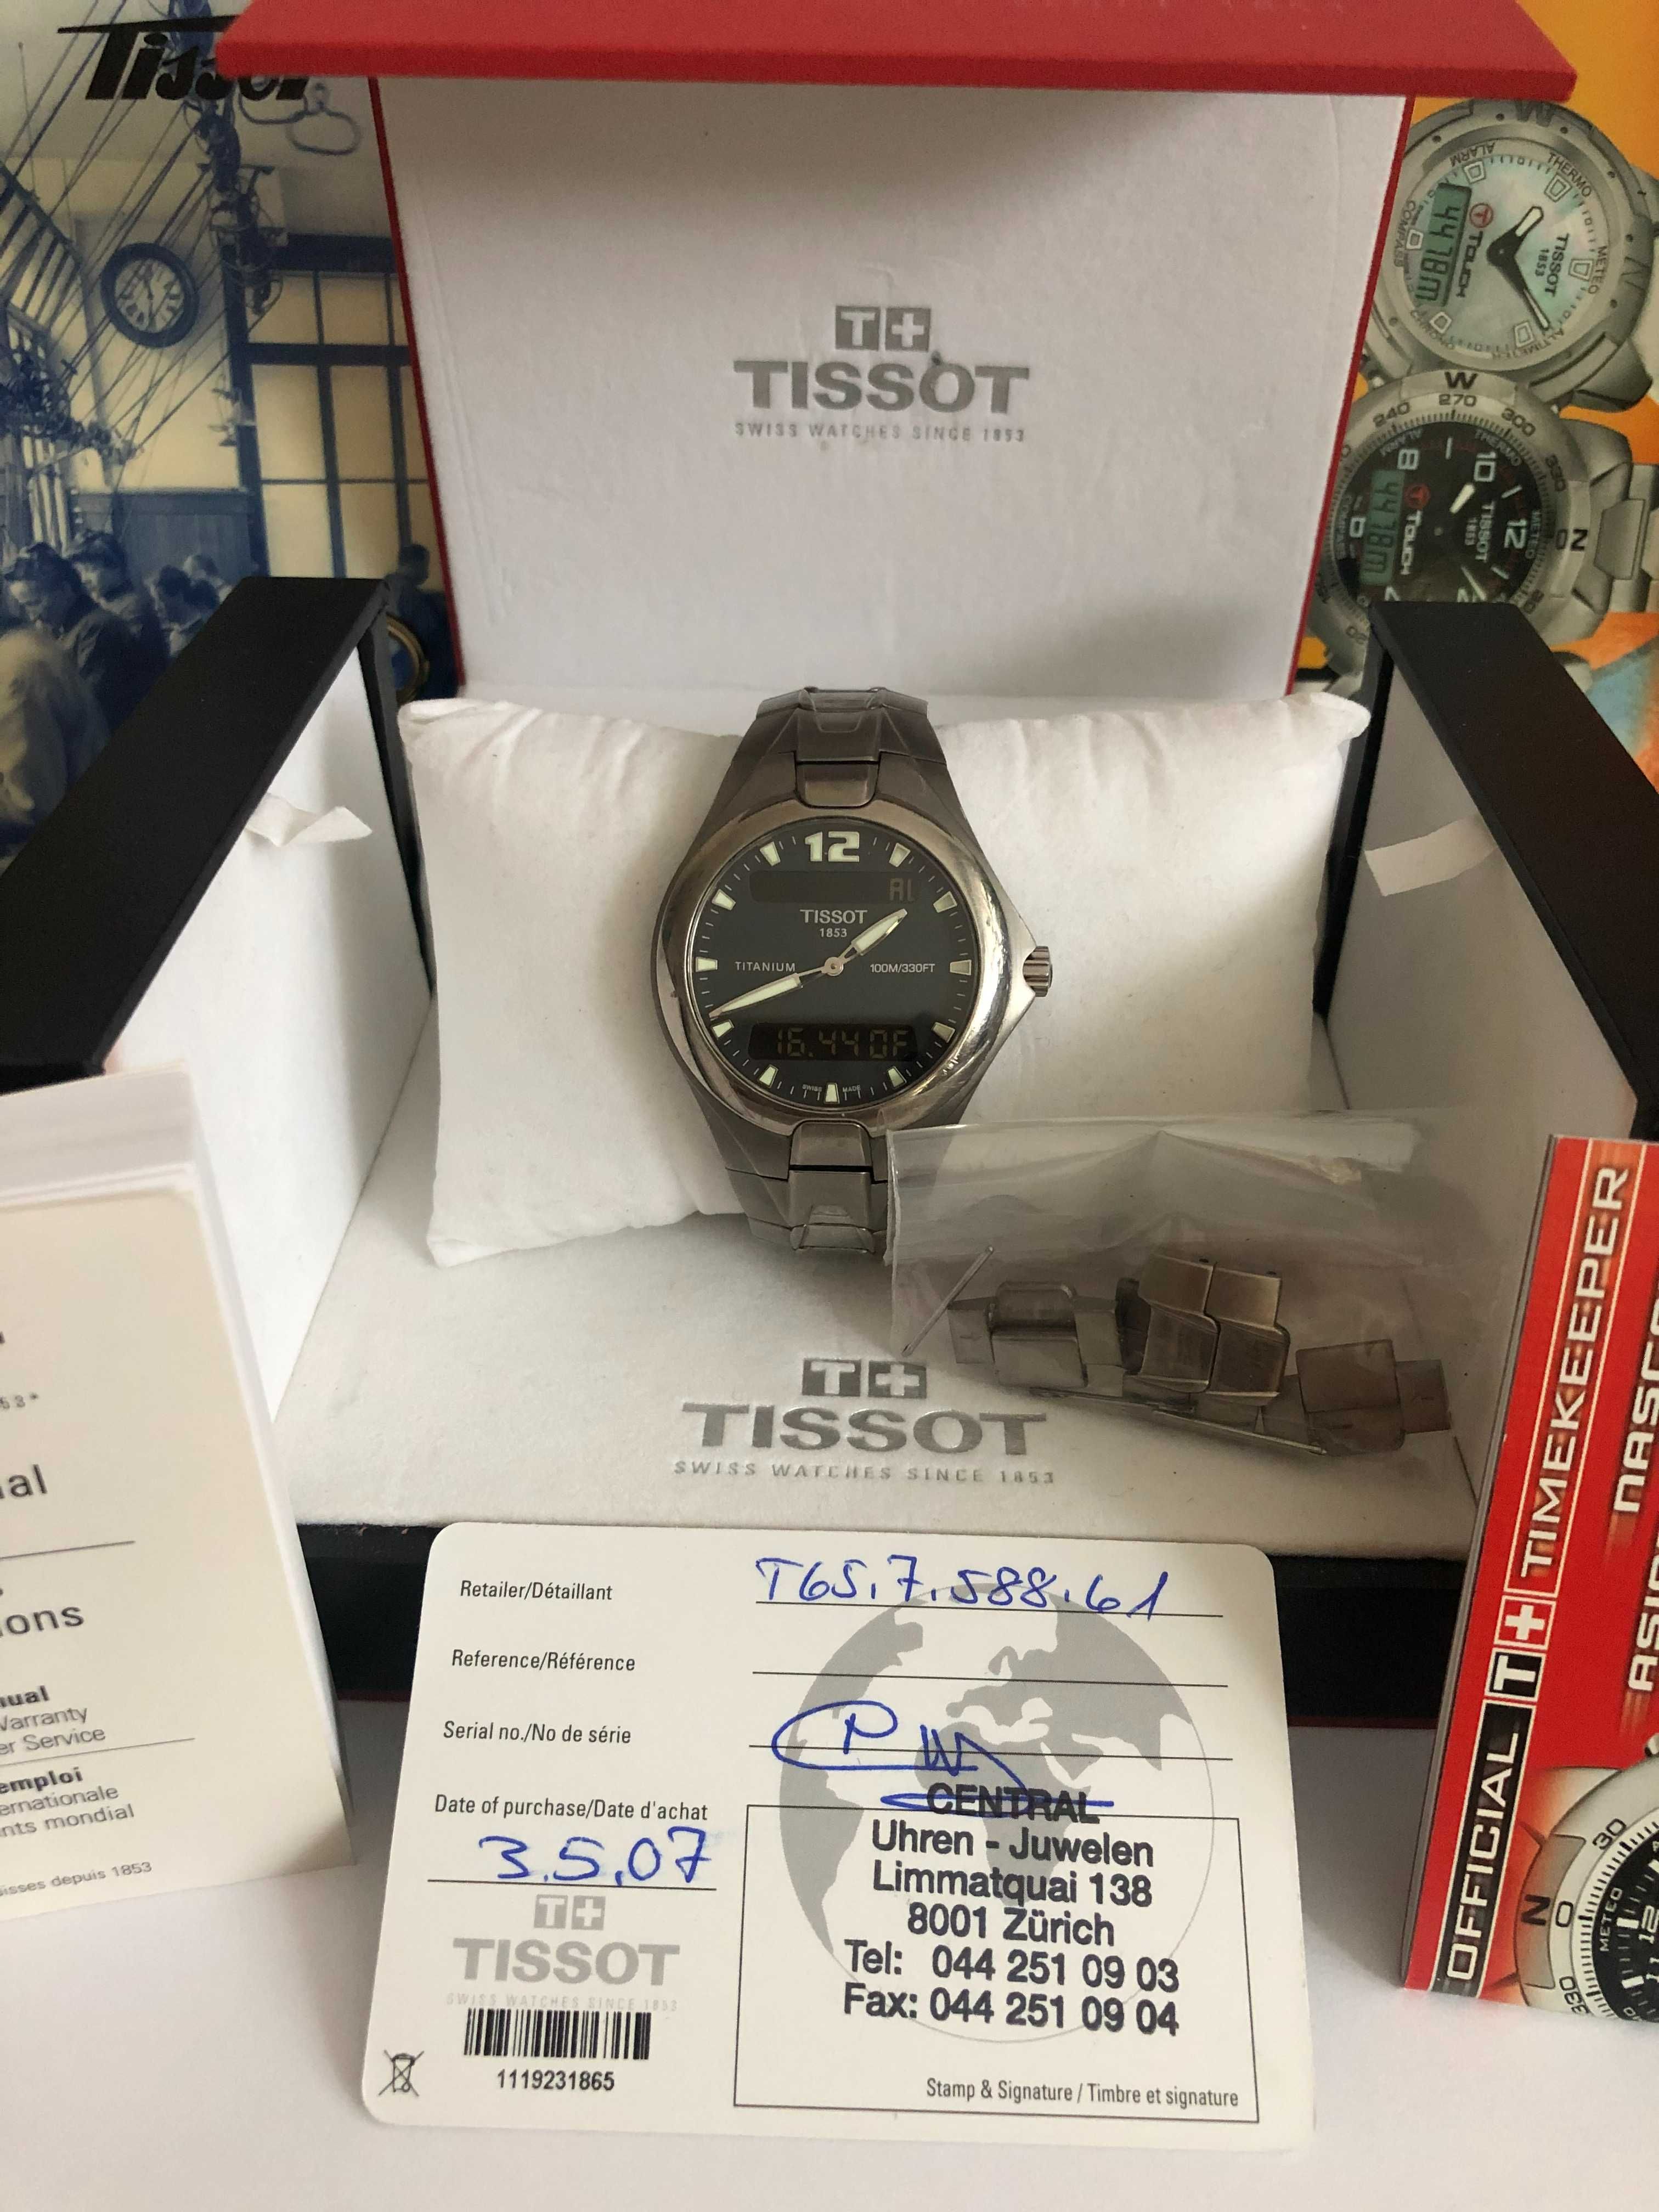 Tissot Aerospace, Titan, T65.7.588.61, Full Set